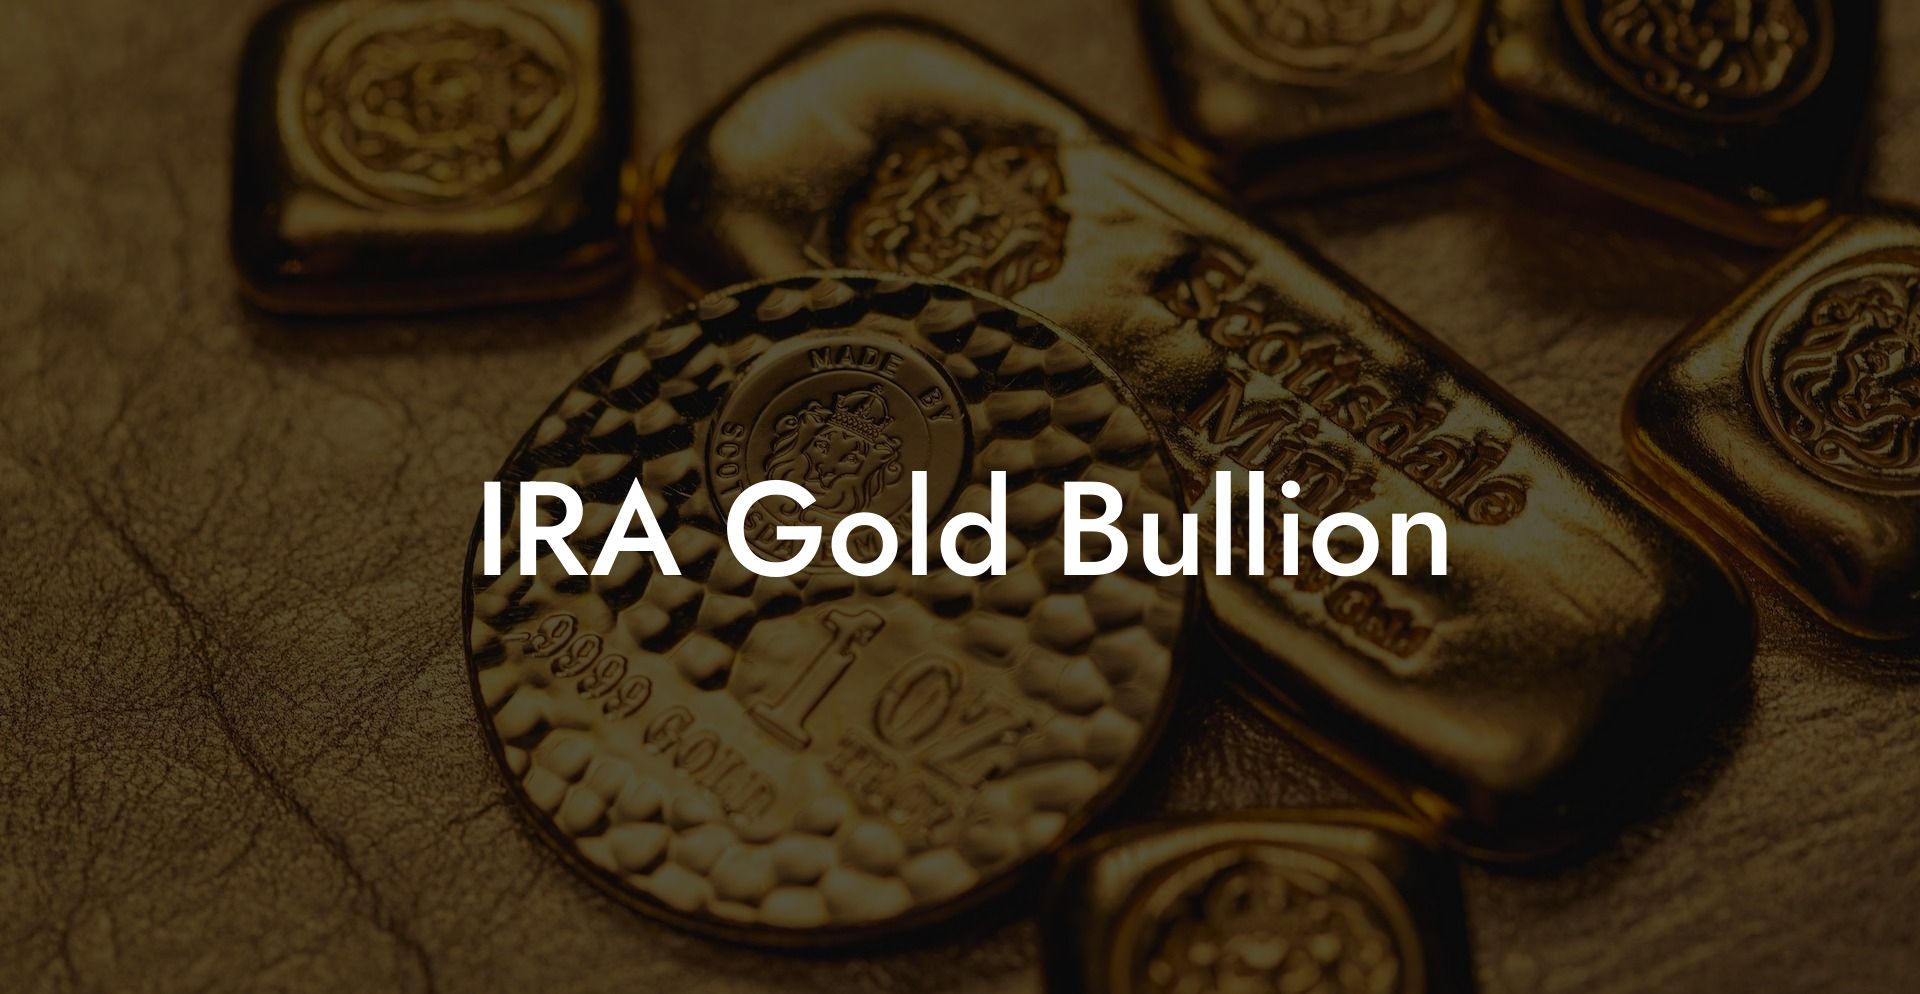 IRA Gold Bullion